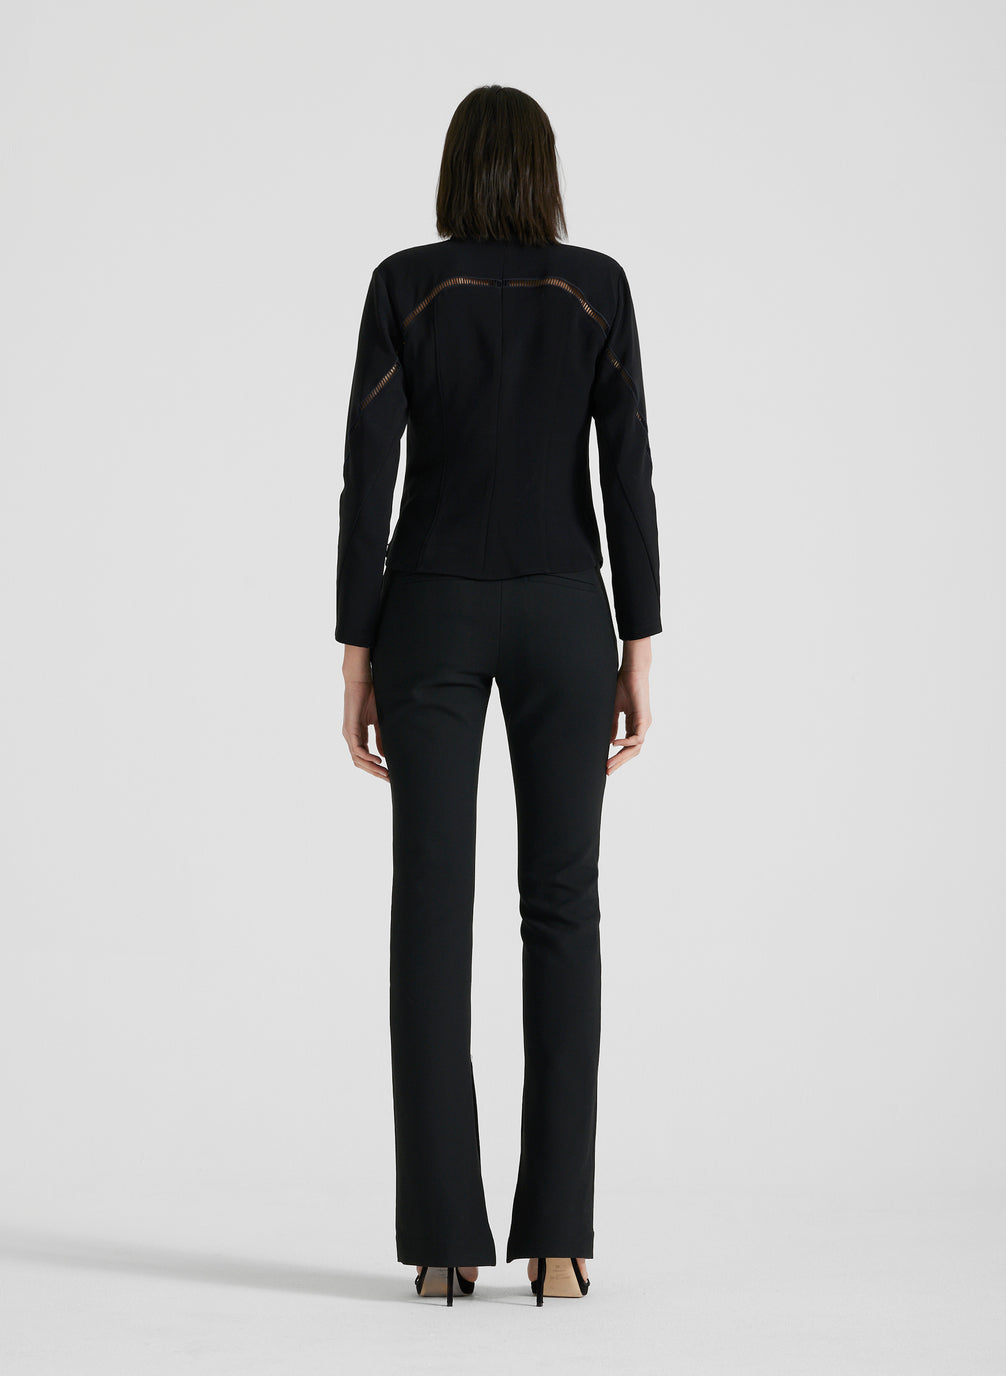 back view of woman wearing black long sleeve shirt and black pants